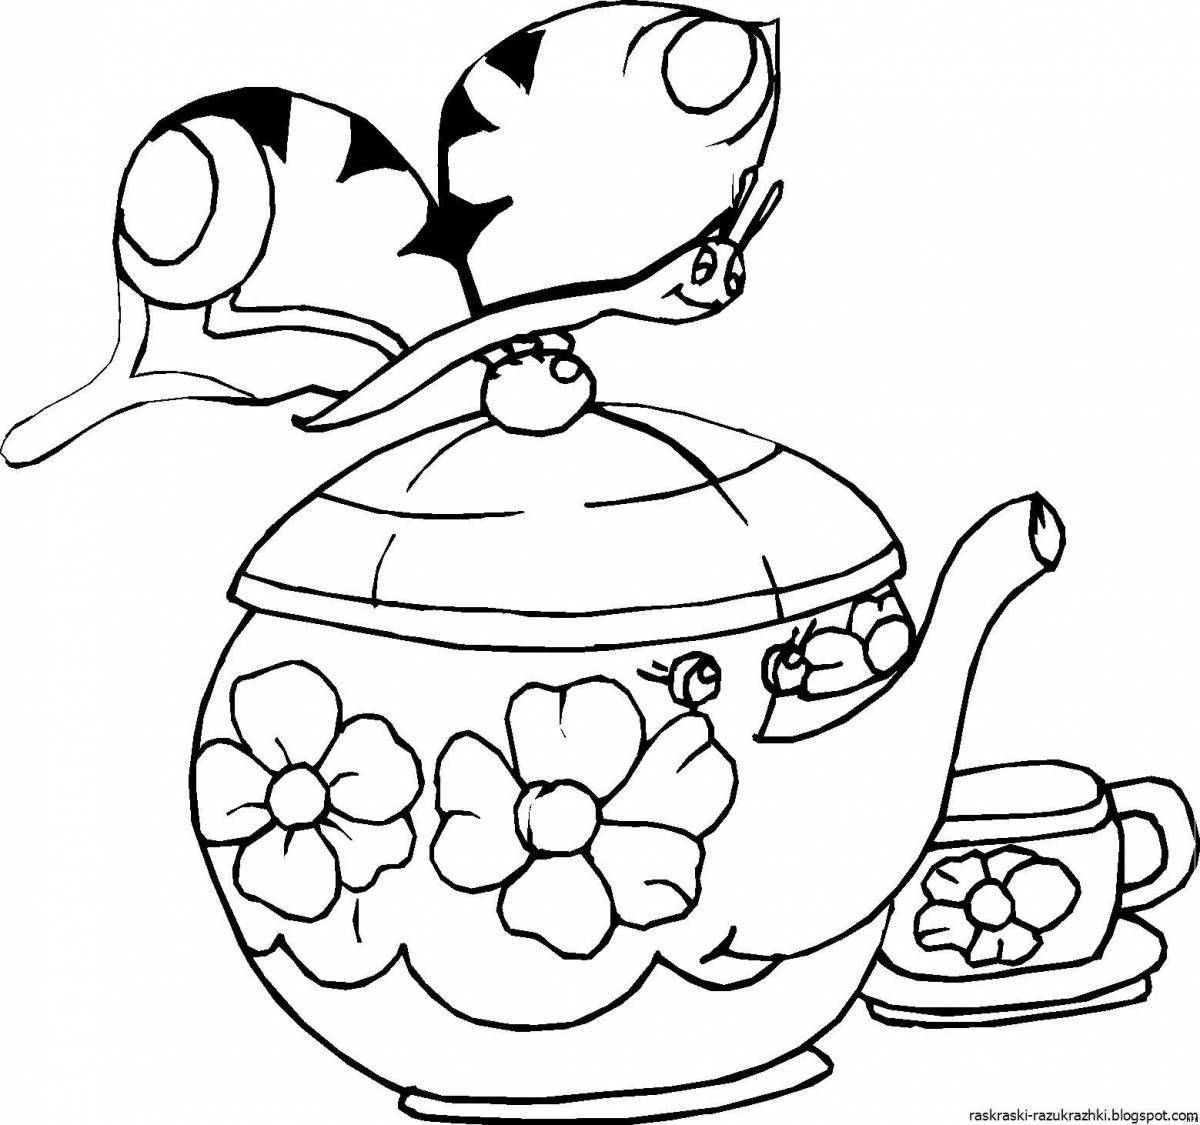 Playful tea set coloring page